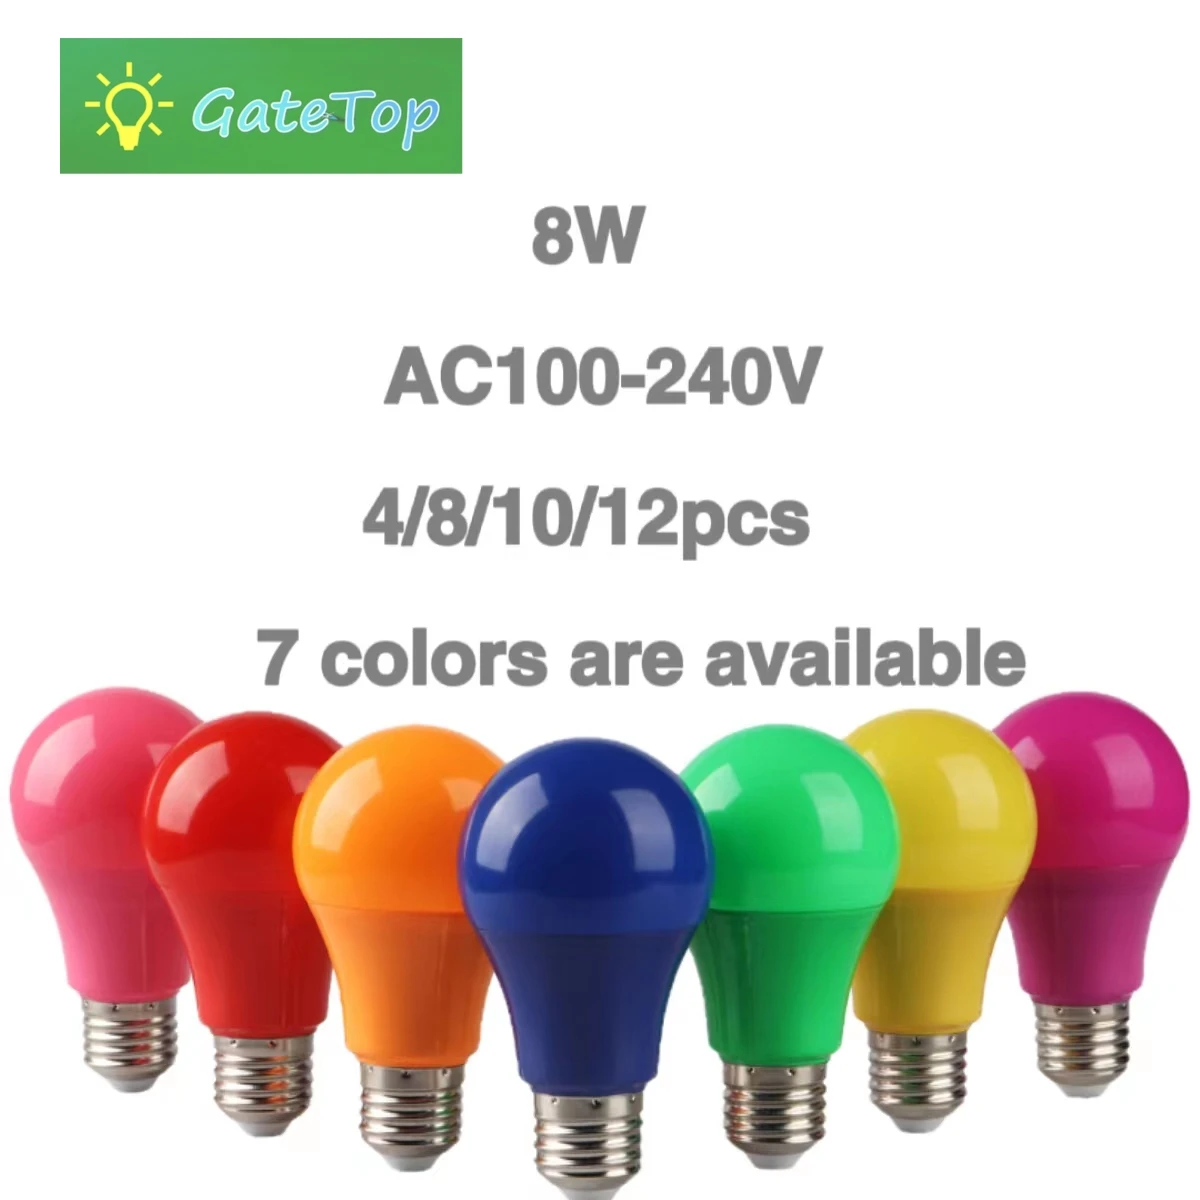 

5-20PCS Led Colorful Lamp AC100-240V Voltage E27 B22 Base Power 8W Seven colors are available for festival celebration, KTV bar